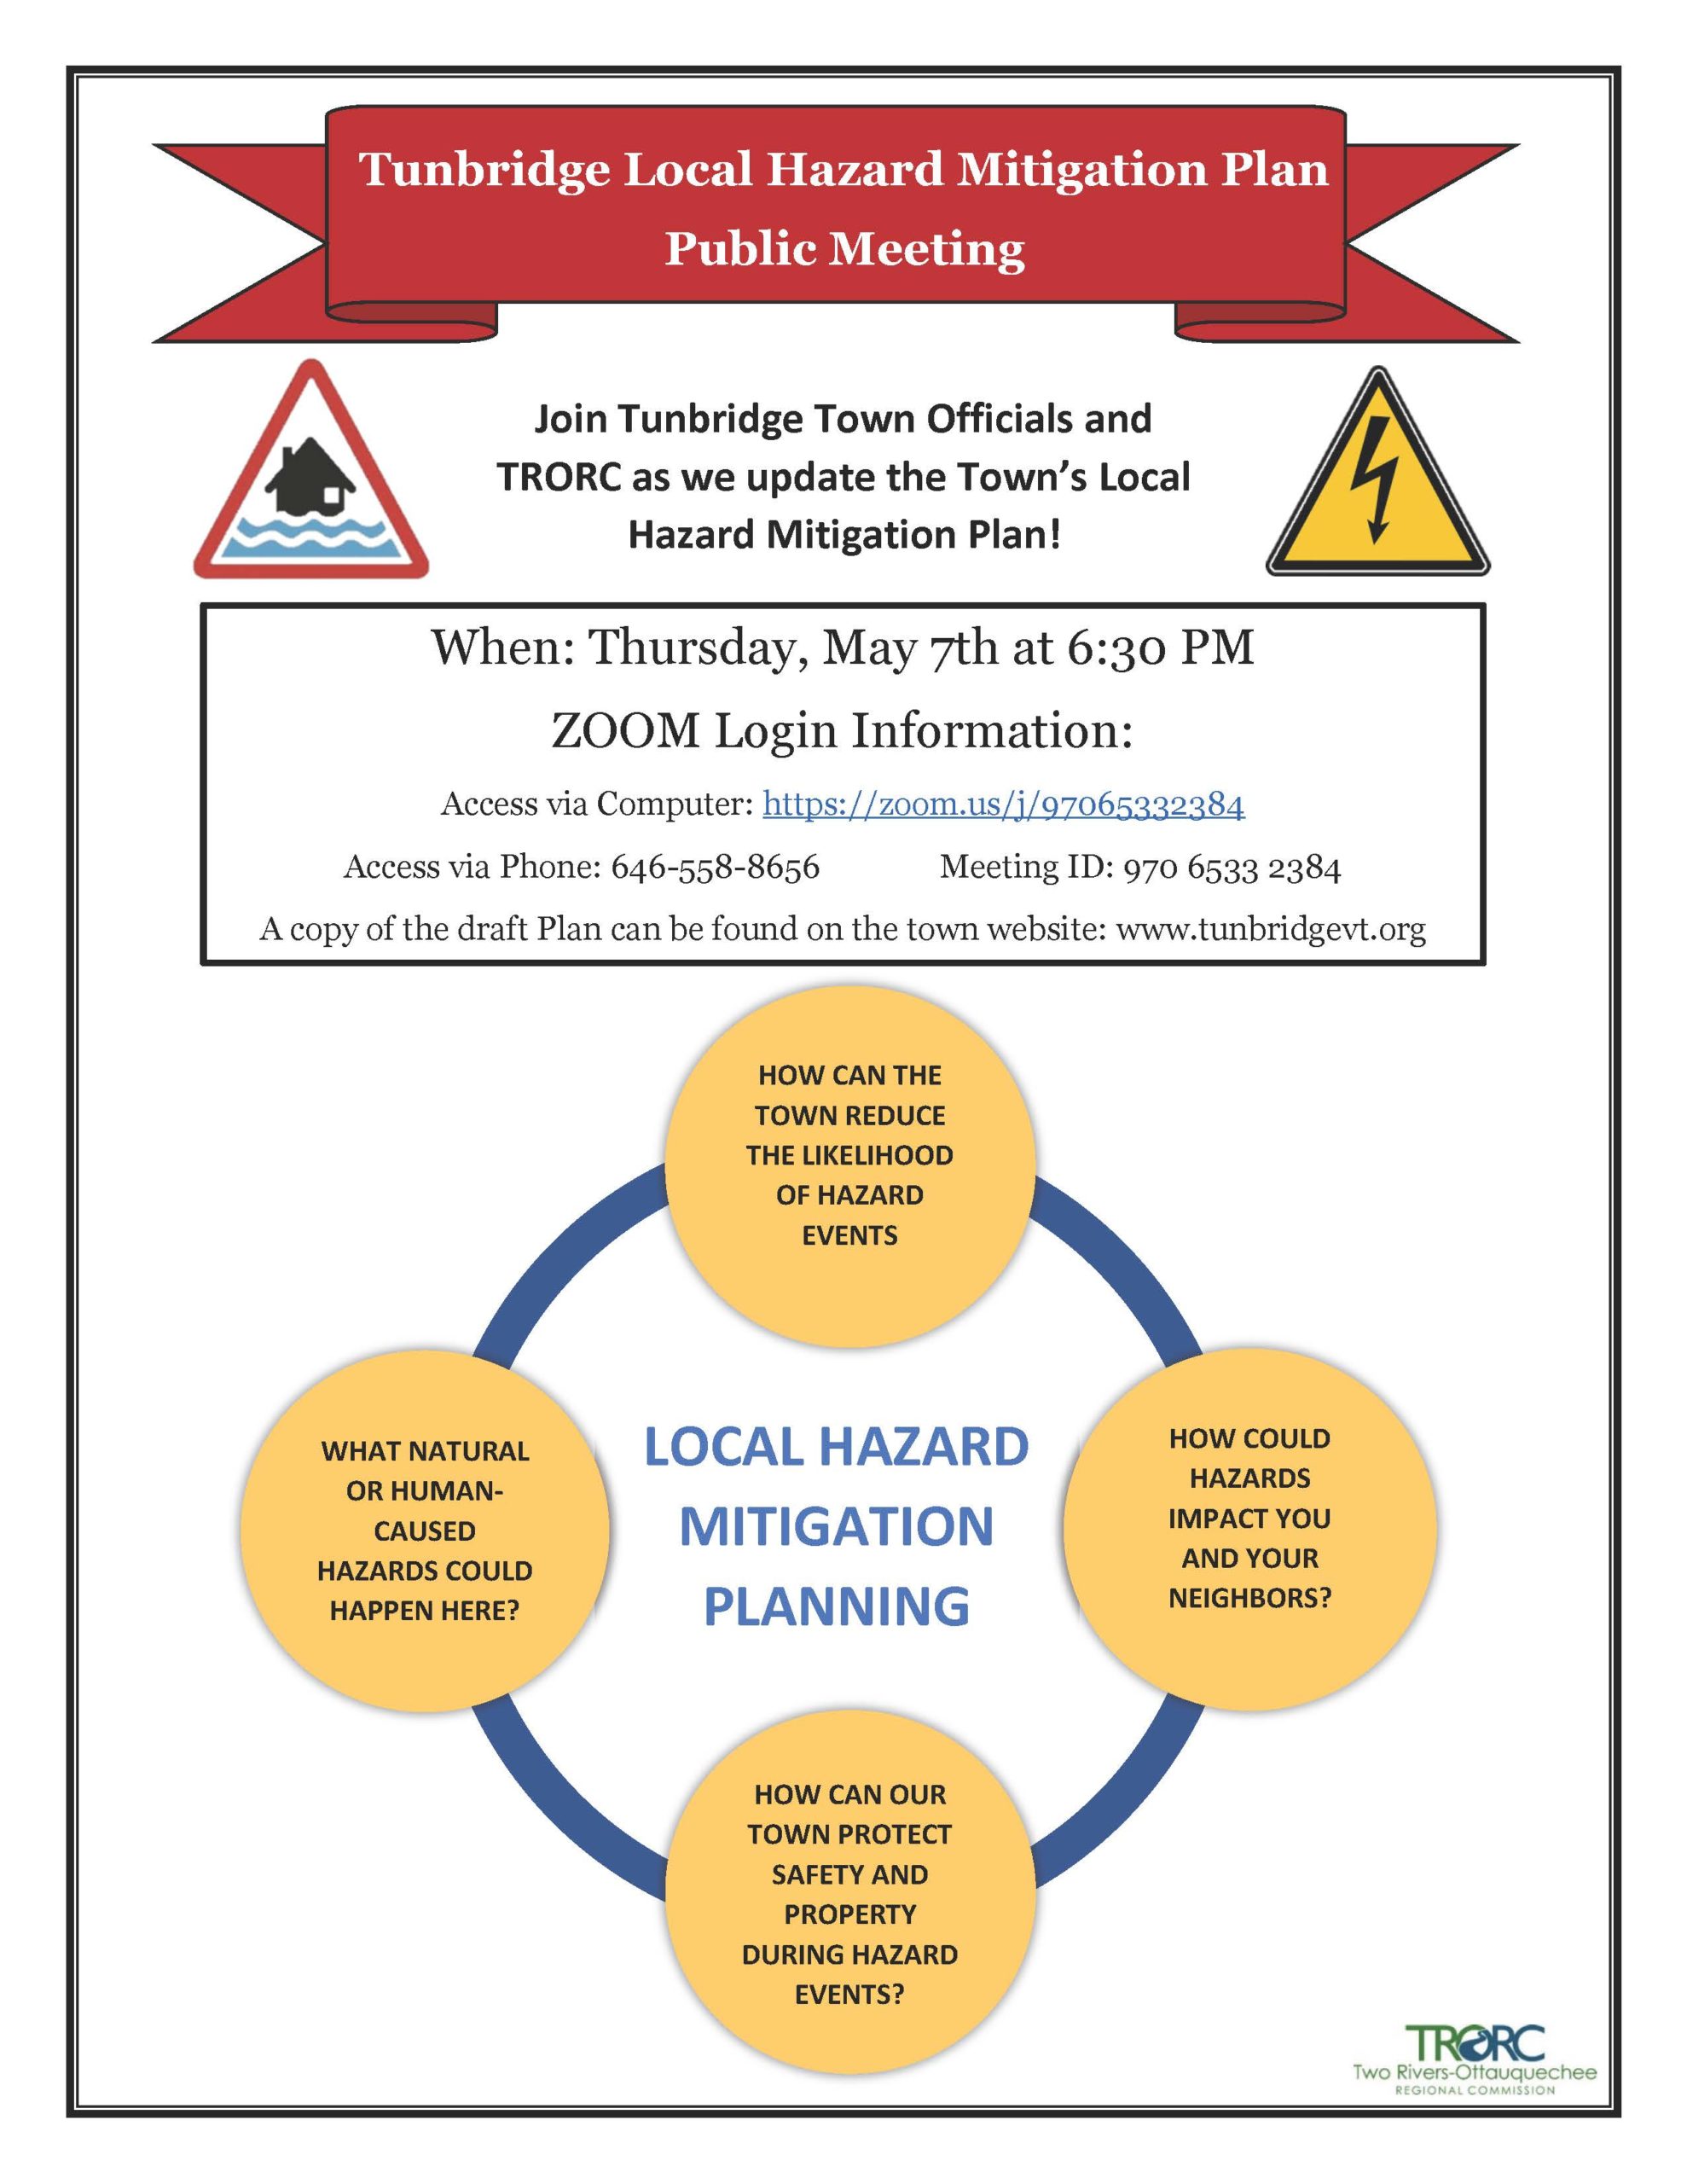 Tunbridge Local Hazard Mitigation Plan Meeting